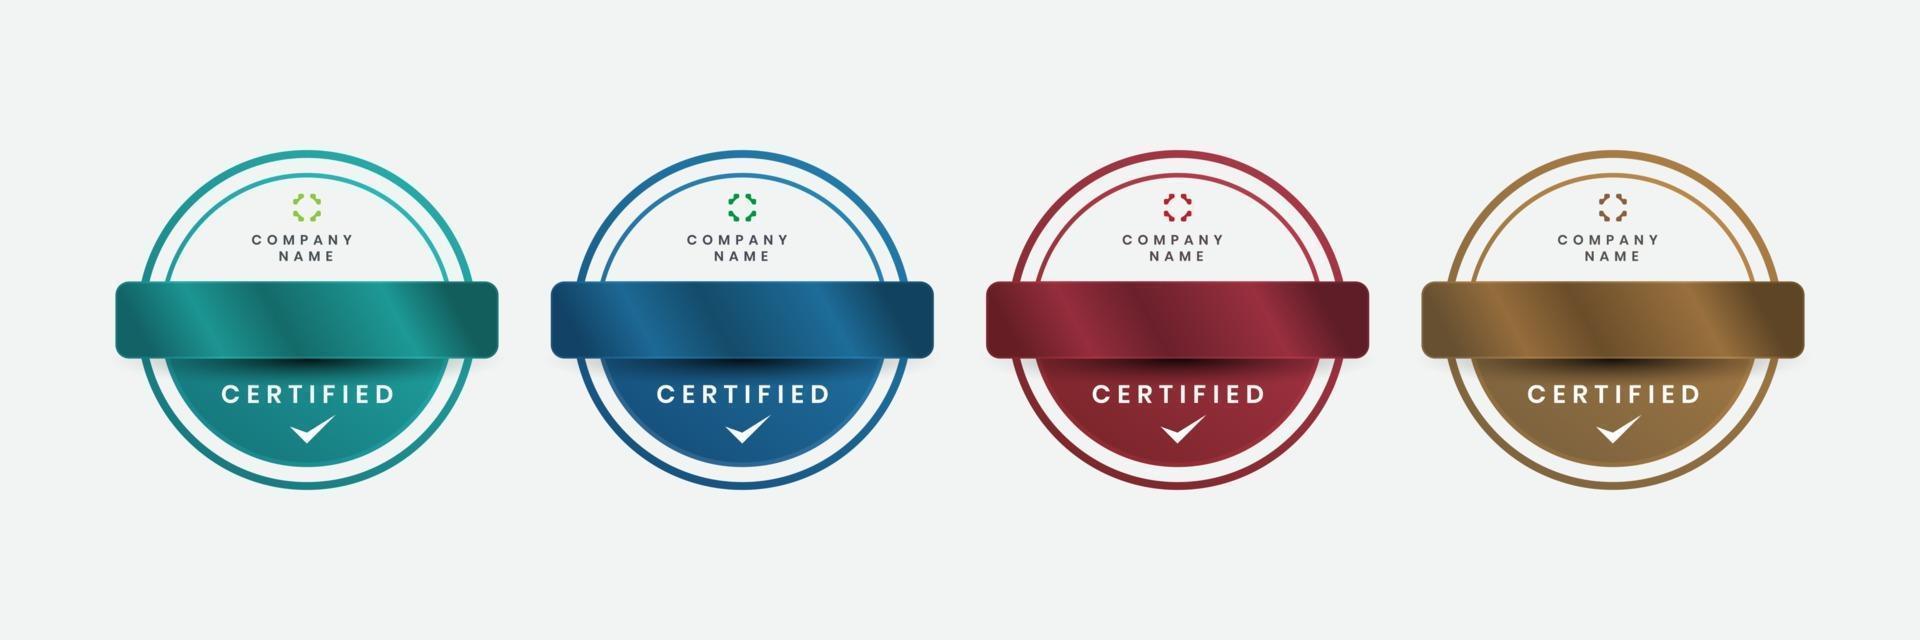 Badge luxury certificates modern logo company Vector illustration certified logo design